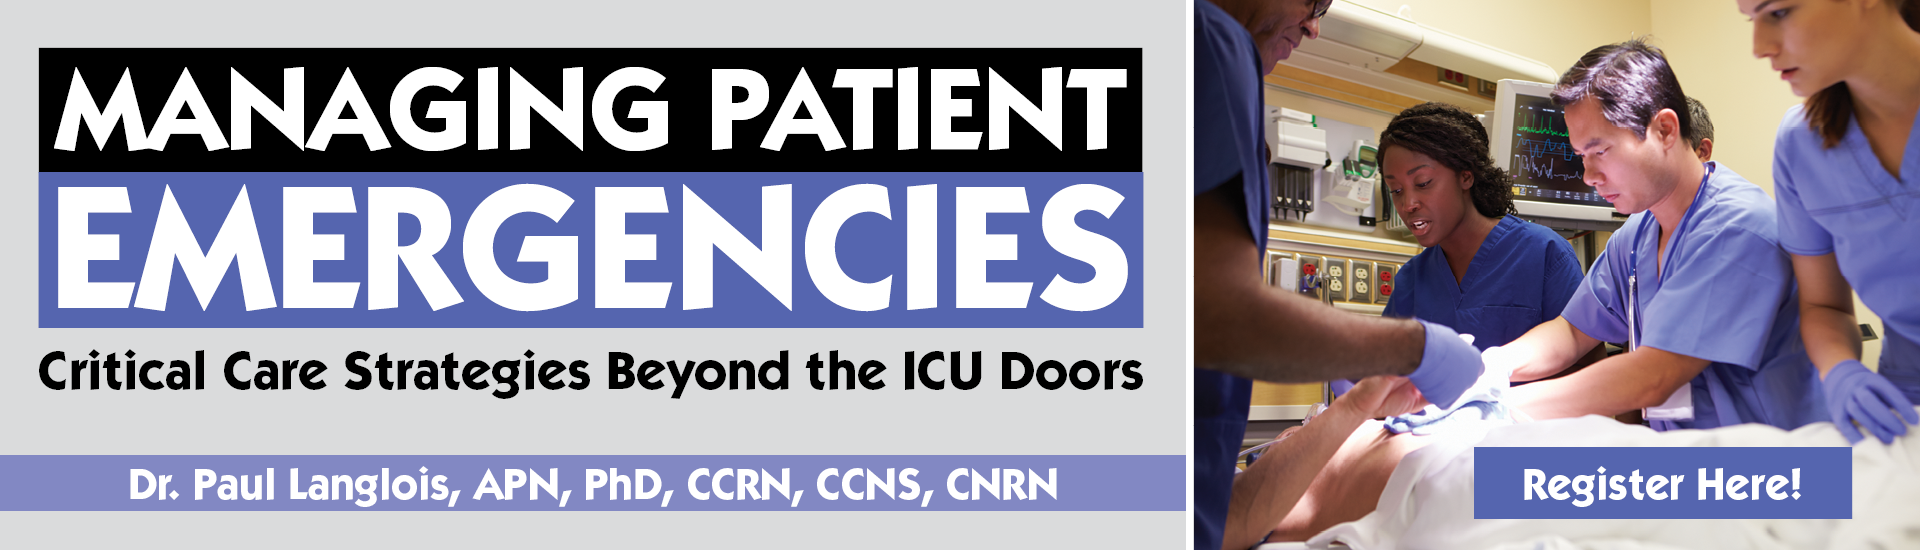 Managing Patient Emergencies: Critical Care Strategies Beyond the ICU Doors